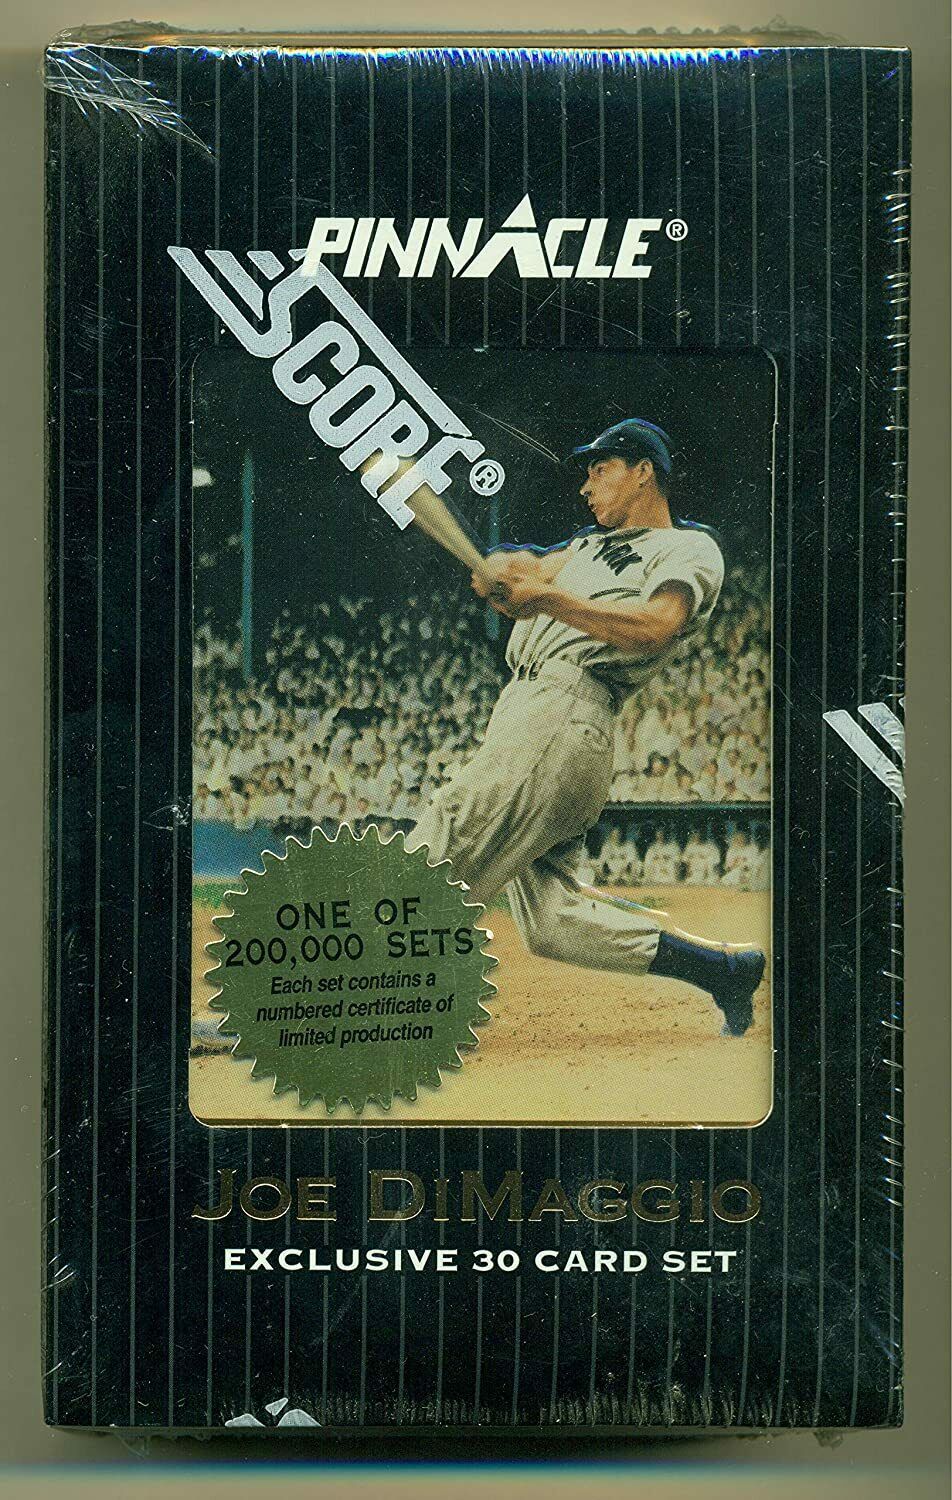 1993 Pinnacle Joe Dimaggio Exclusive 30 Card Commemorative Set Sealed with COA